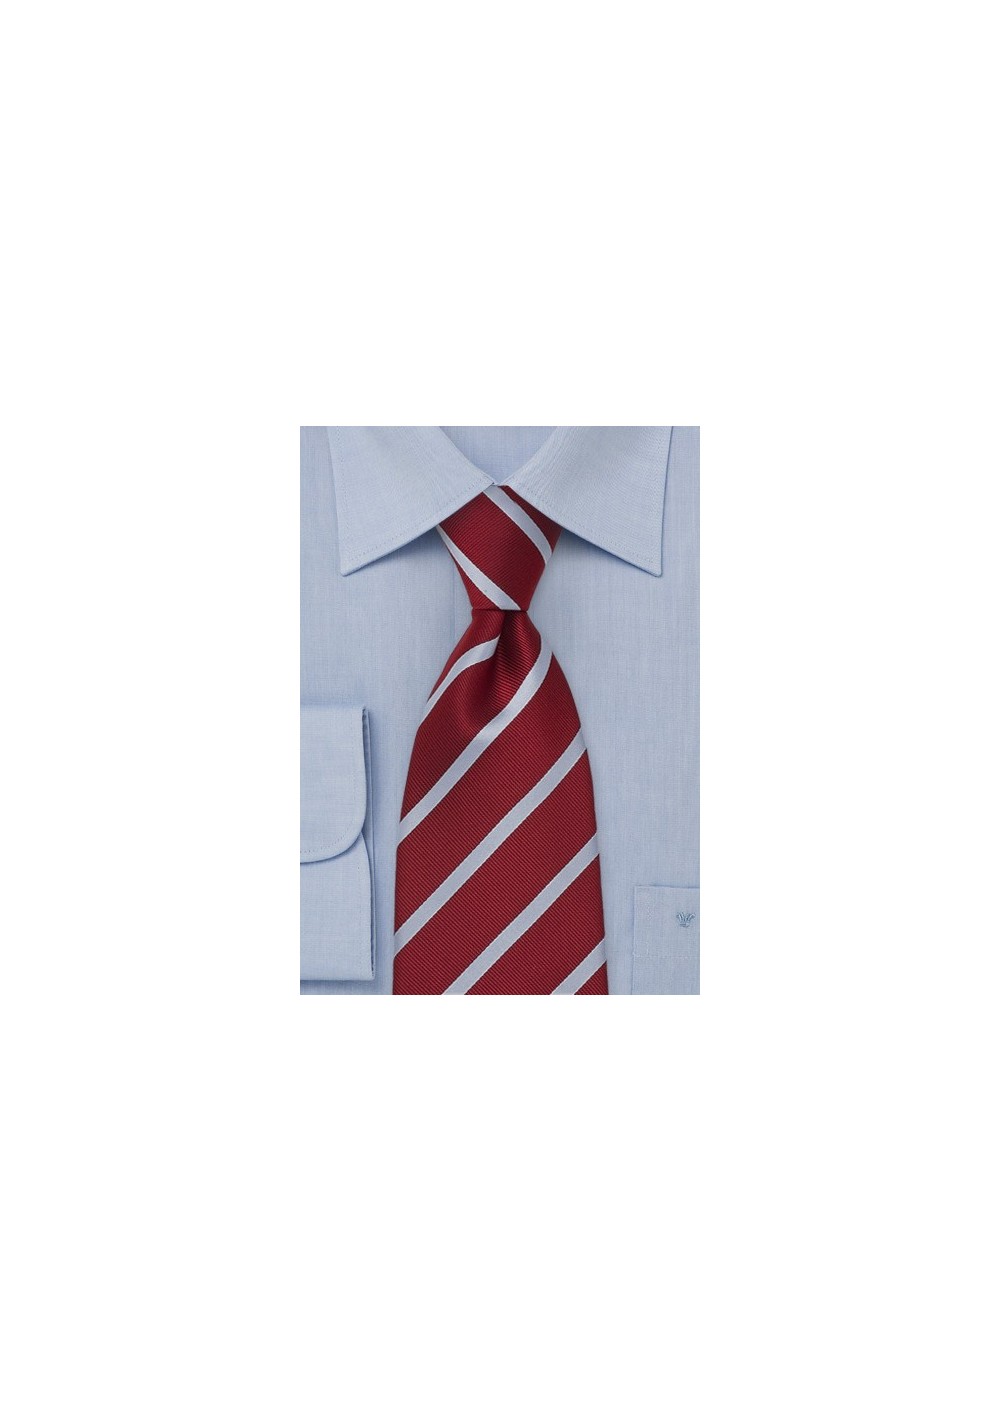 Cherry Red Striped Mens Tie